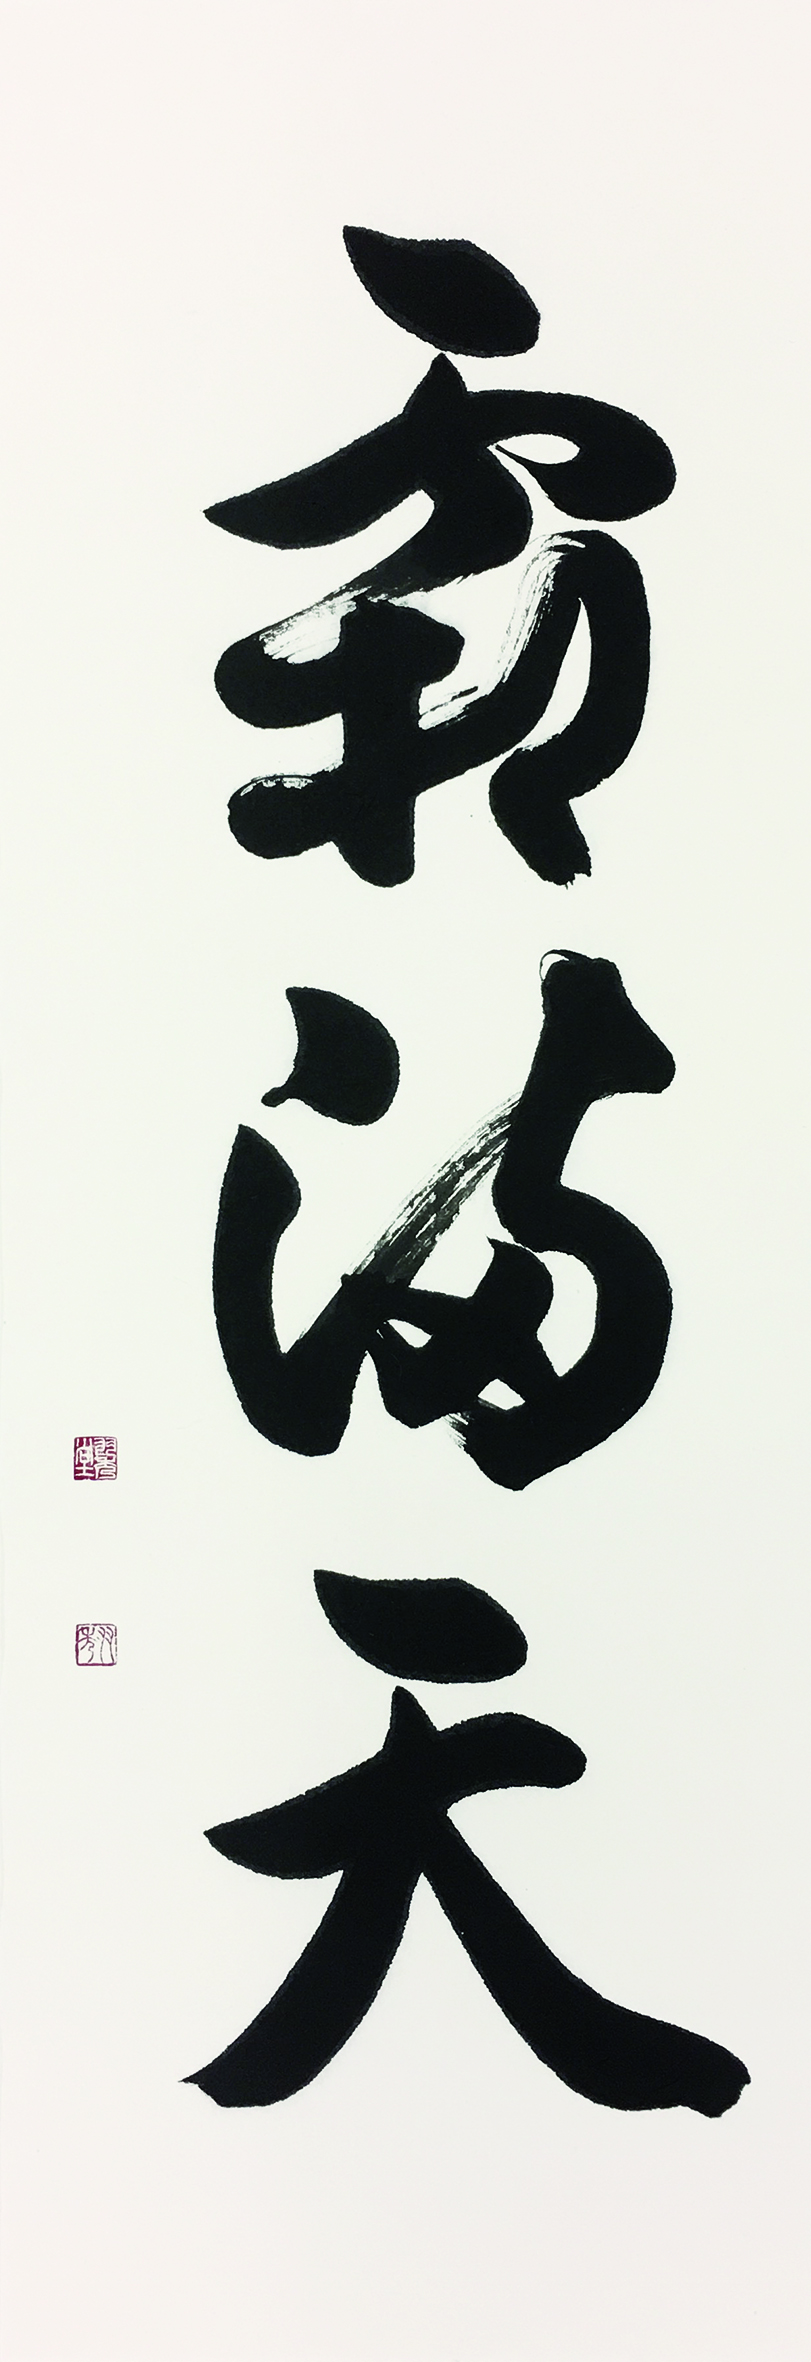 Ursula Weiss, Der Reif erfüllt den Himmel, 2016, Tusche auf Japanpapier, 83 x 29 cm